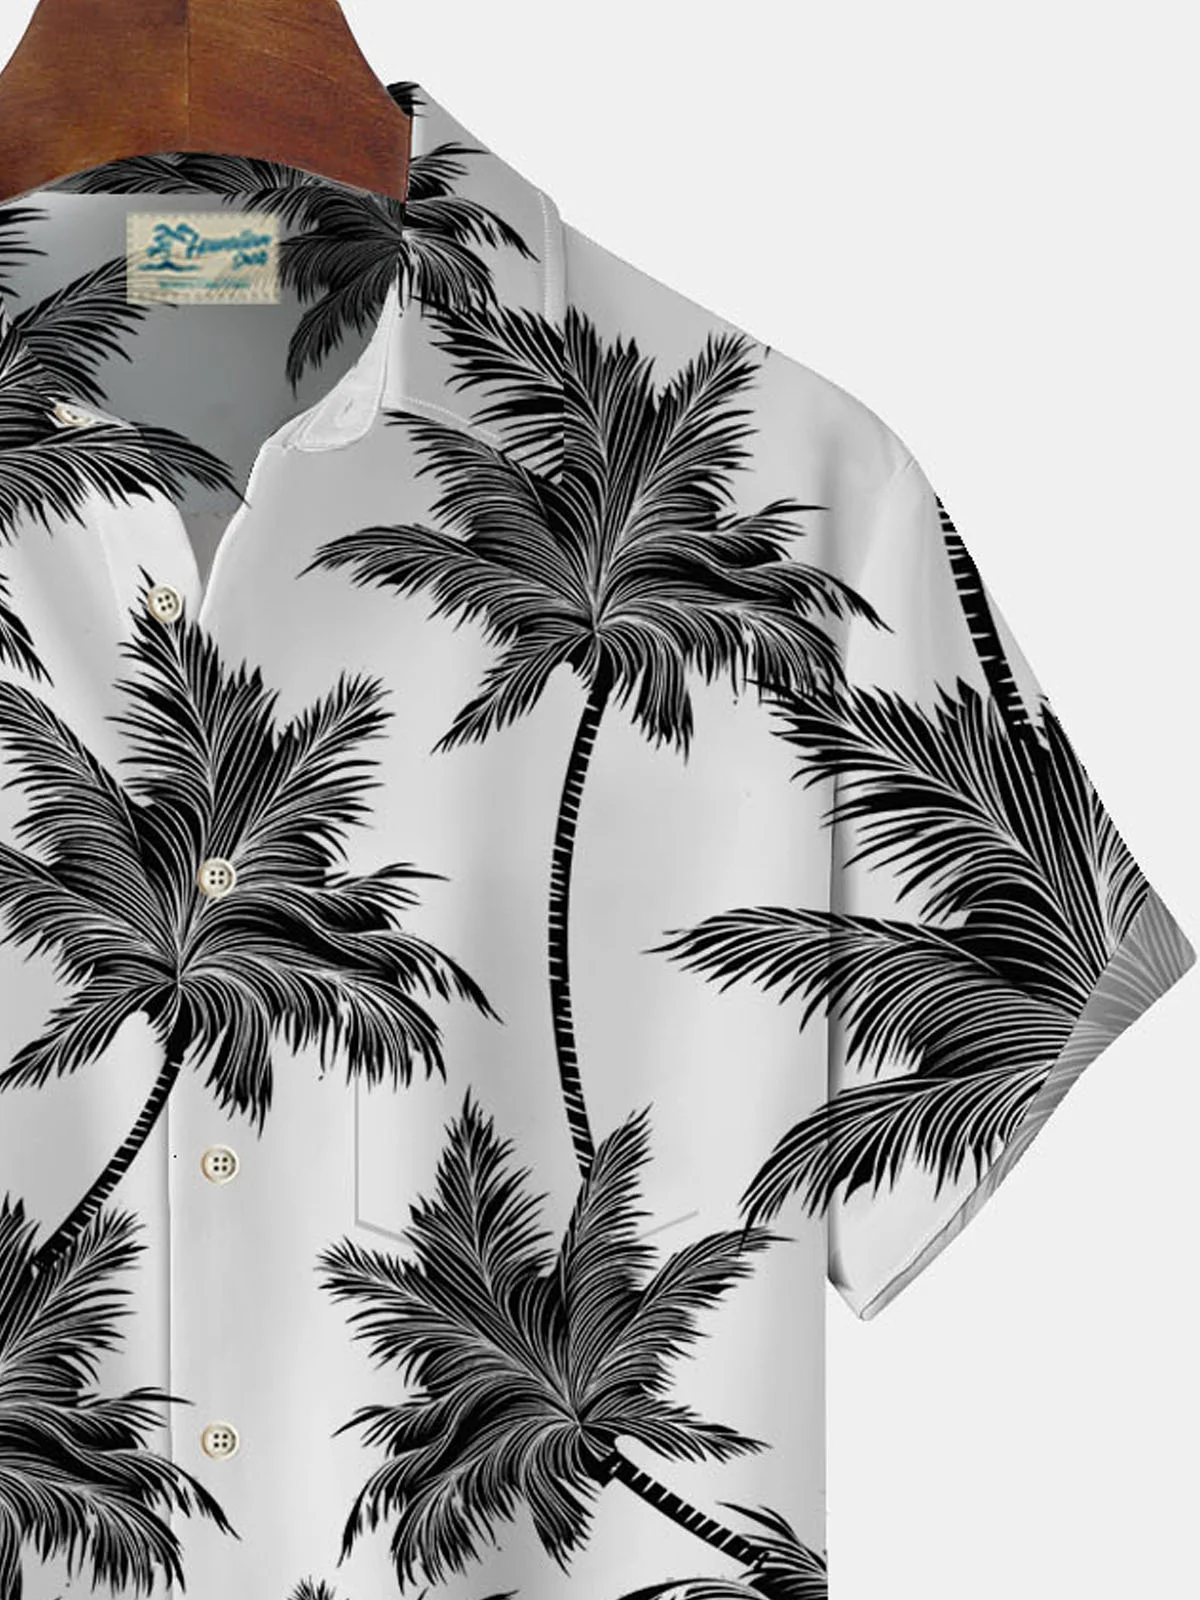 Royaura Hawaiian Coconut Tree Print Men's Button Pocket Short Sleeve Shirt Two-Piece Set